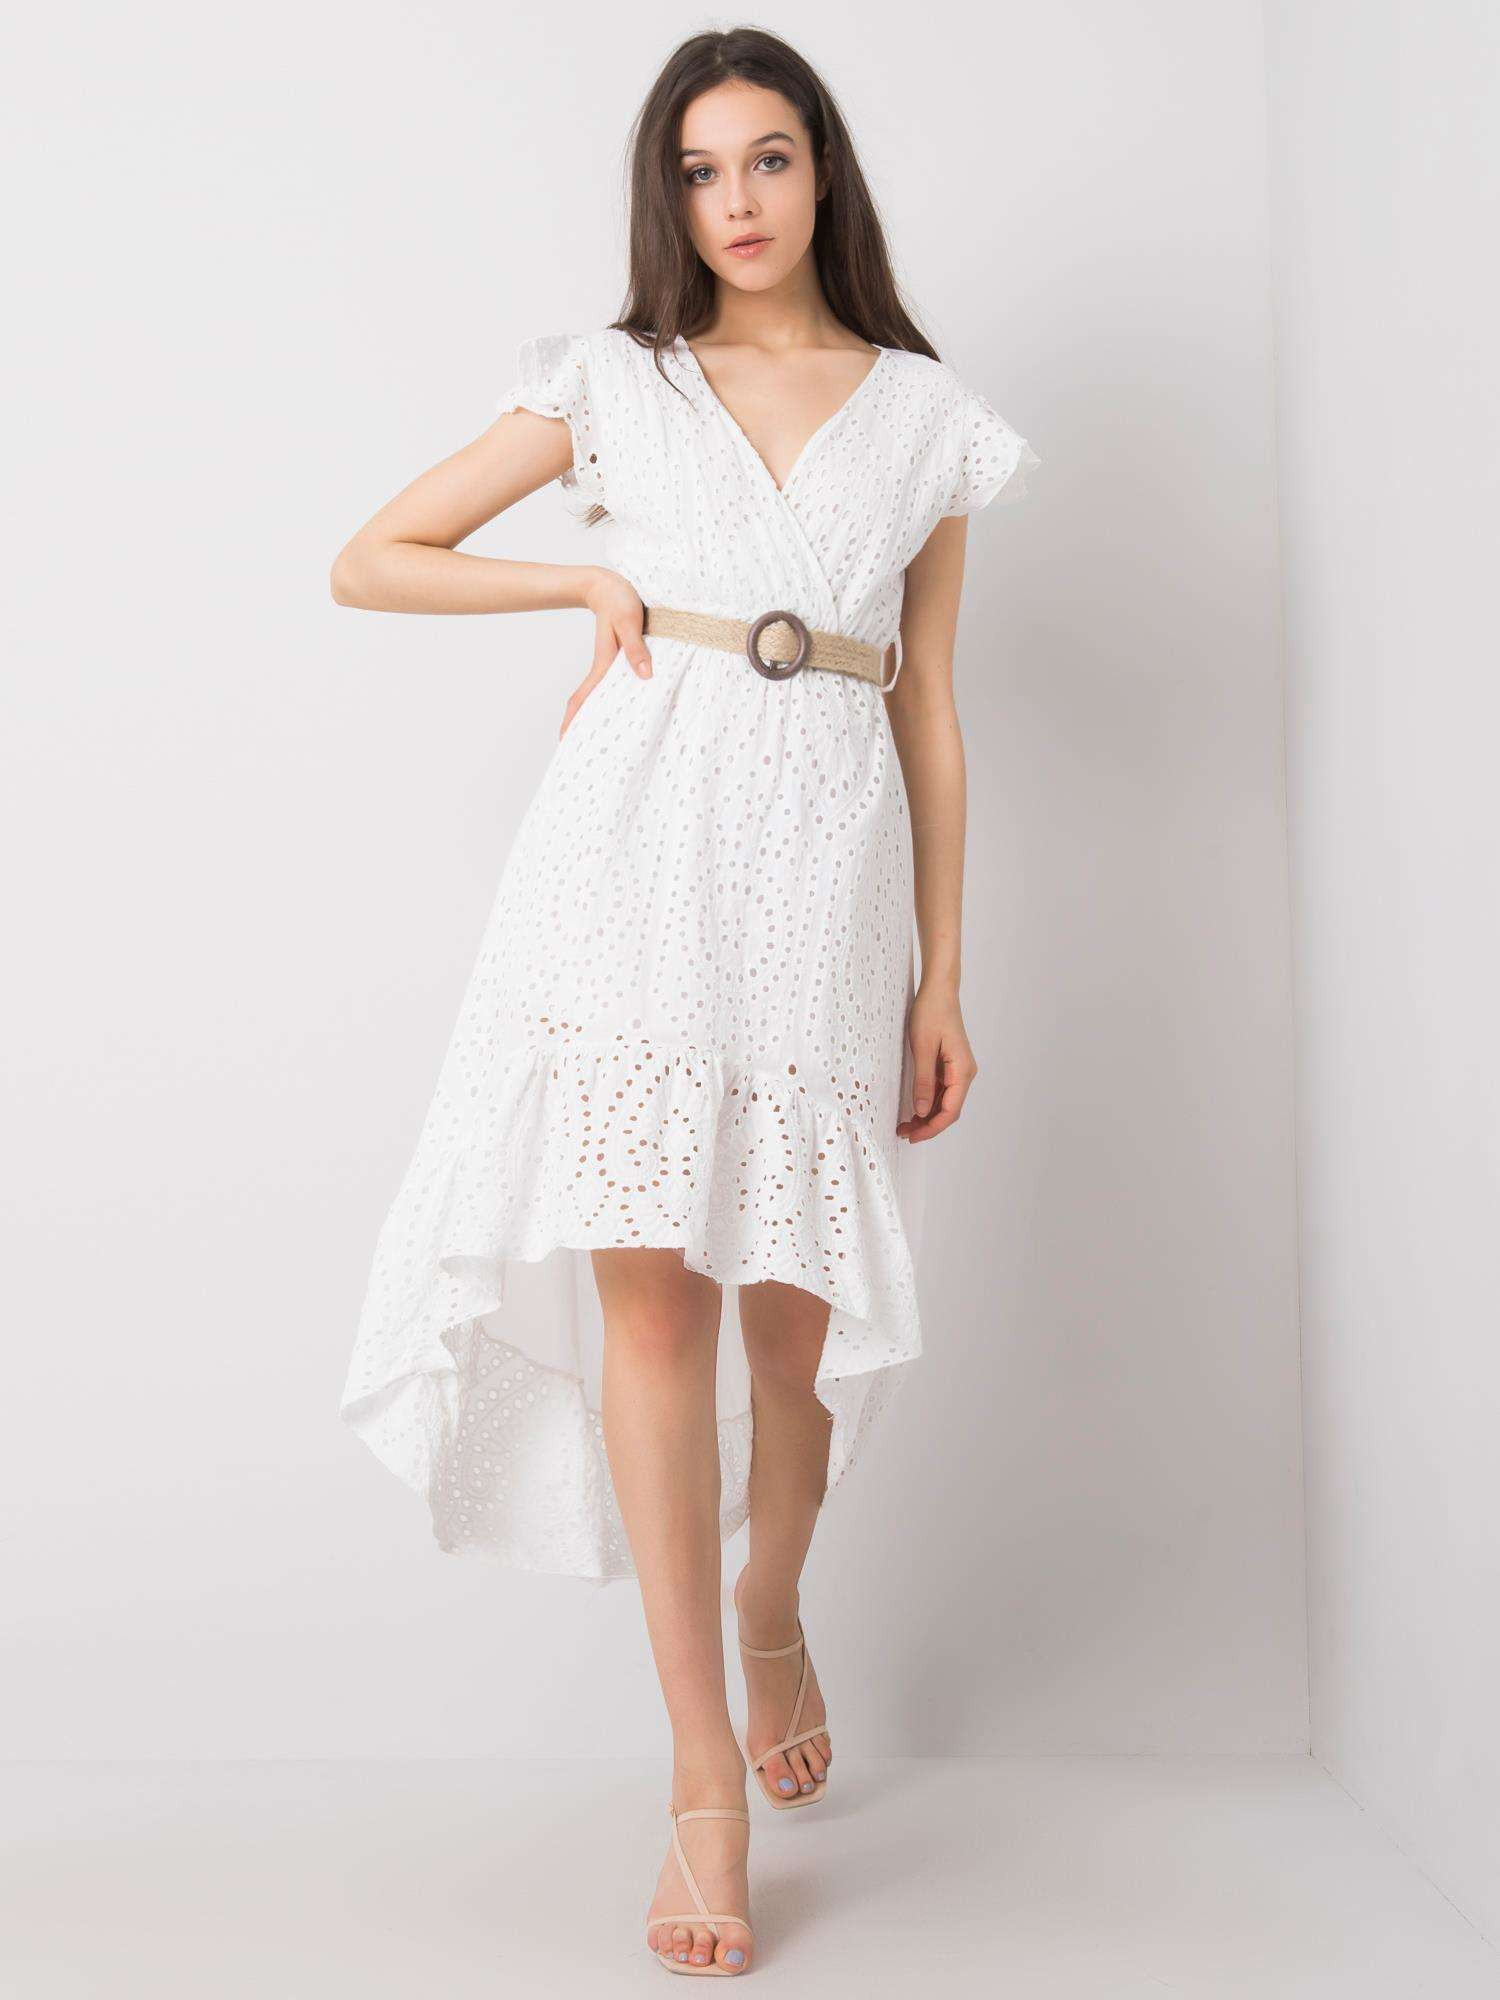 Dámské šaty TW SK BI model 18257791 bílé - FPrice Velikost: XL, Barvy: bílá